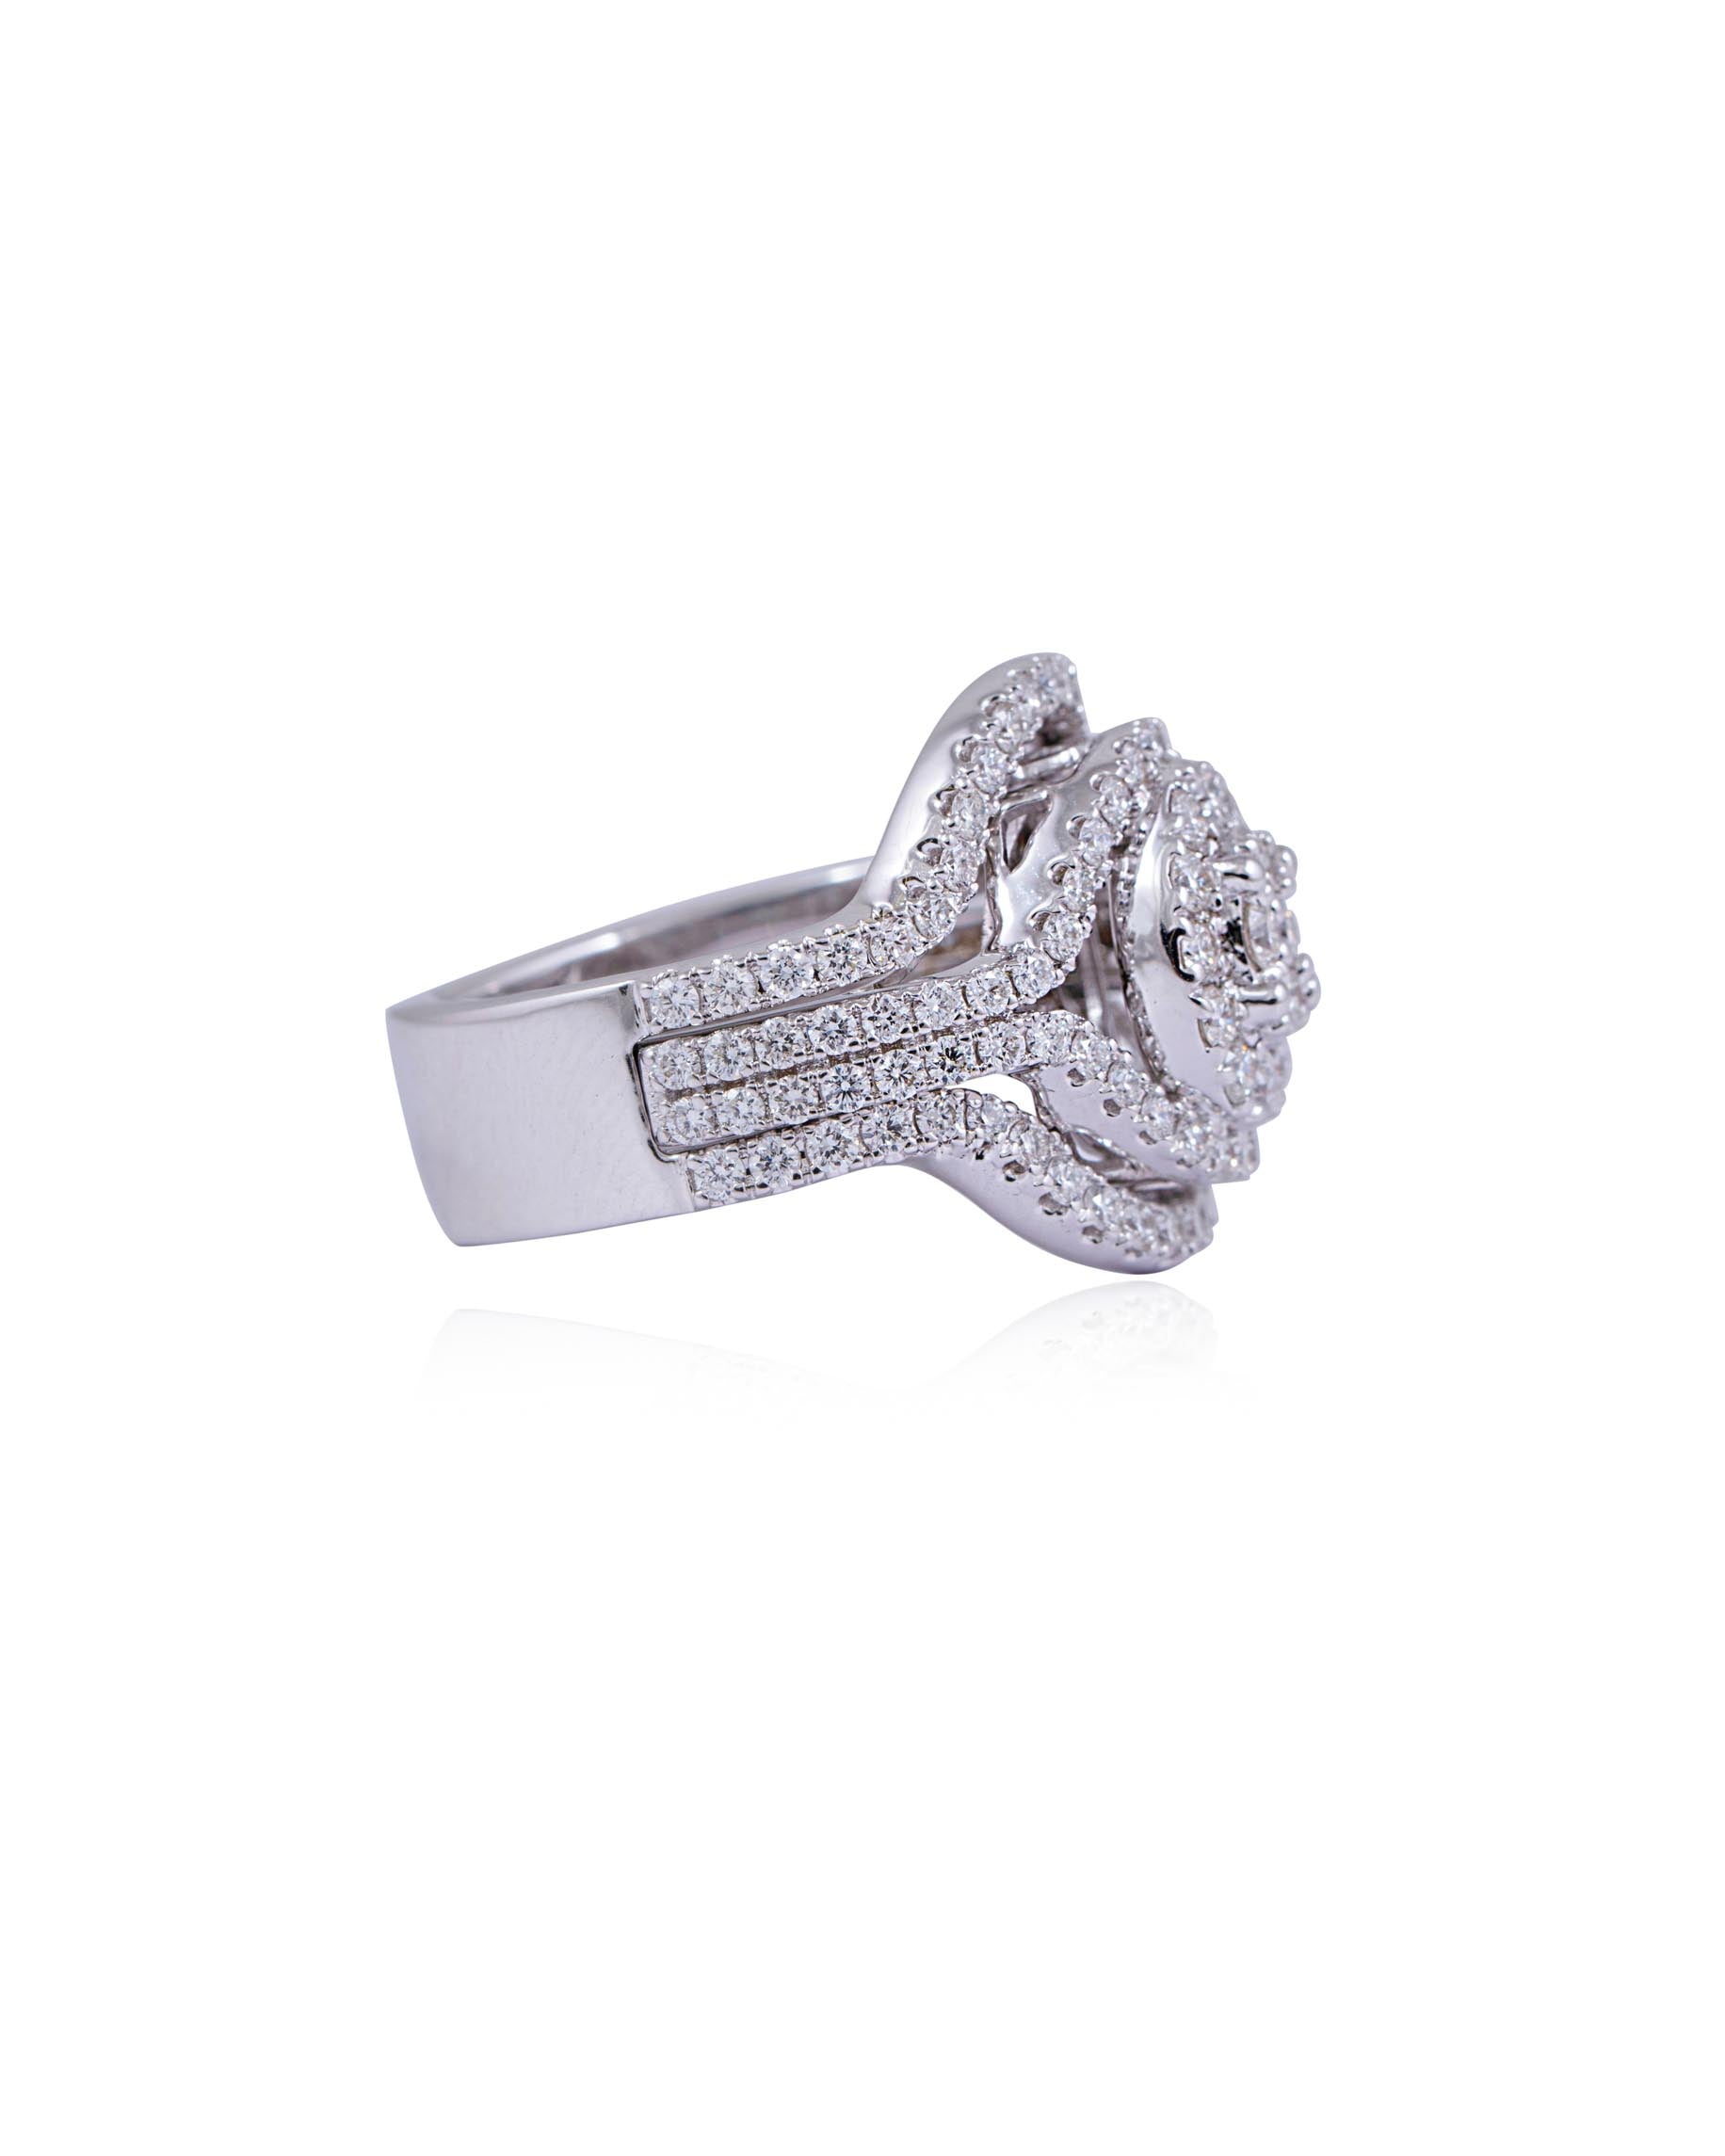 Diamond Ring - NO ORDERS